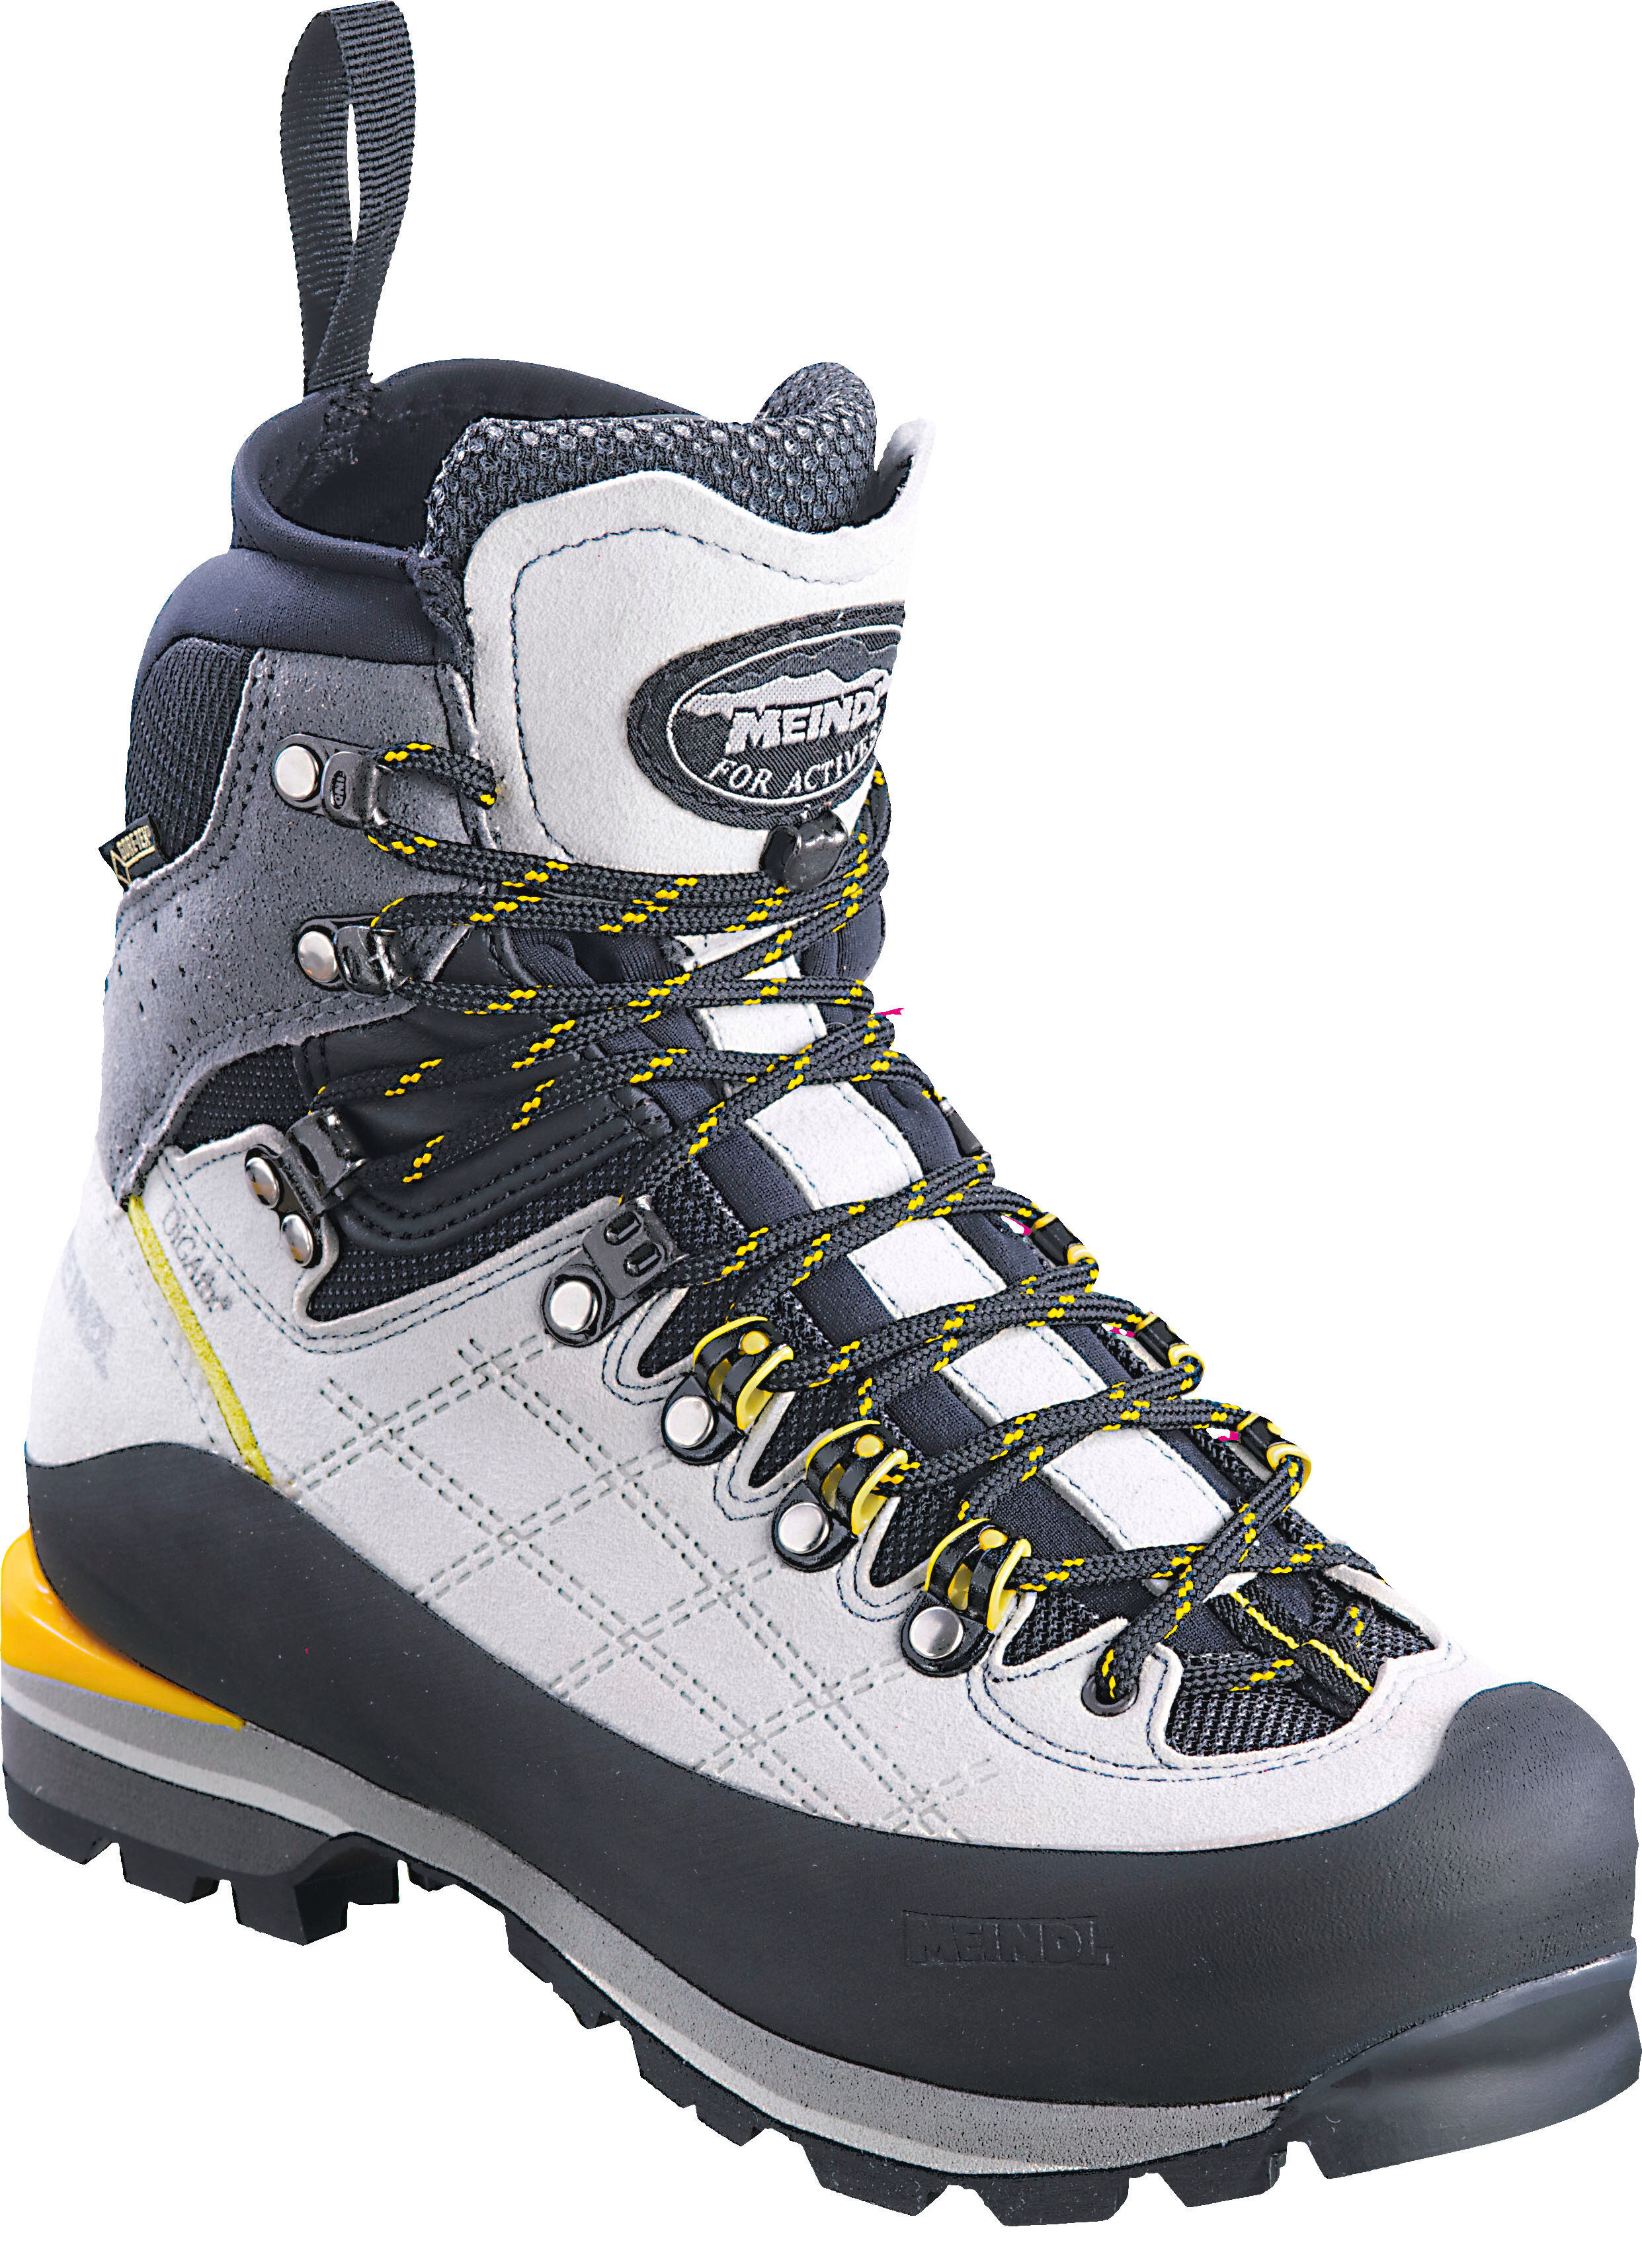 Meindl - Jorasse Lady GTX® - Hiking Boots - Women's